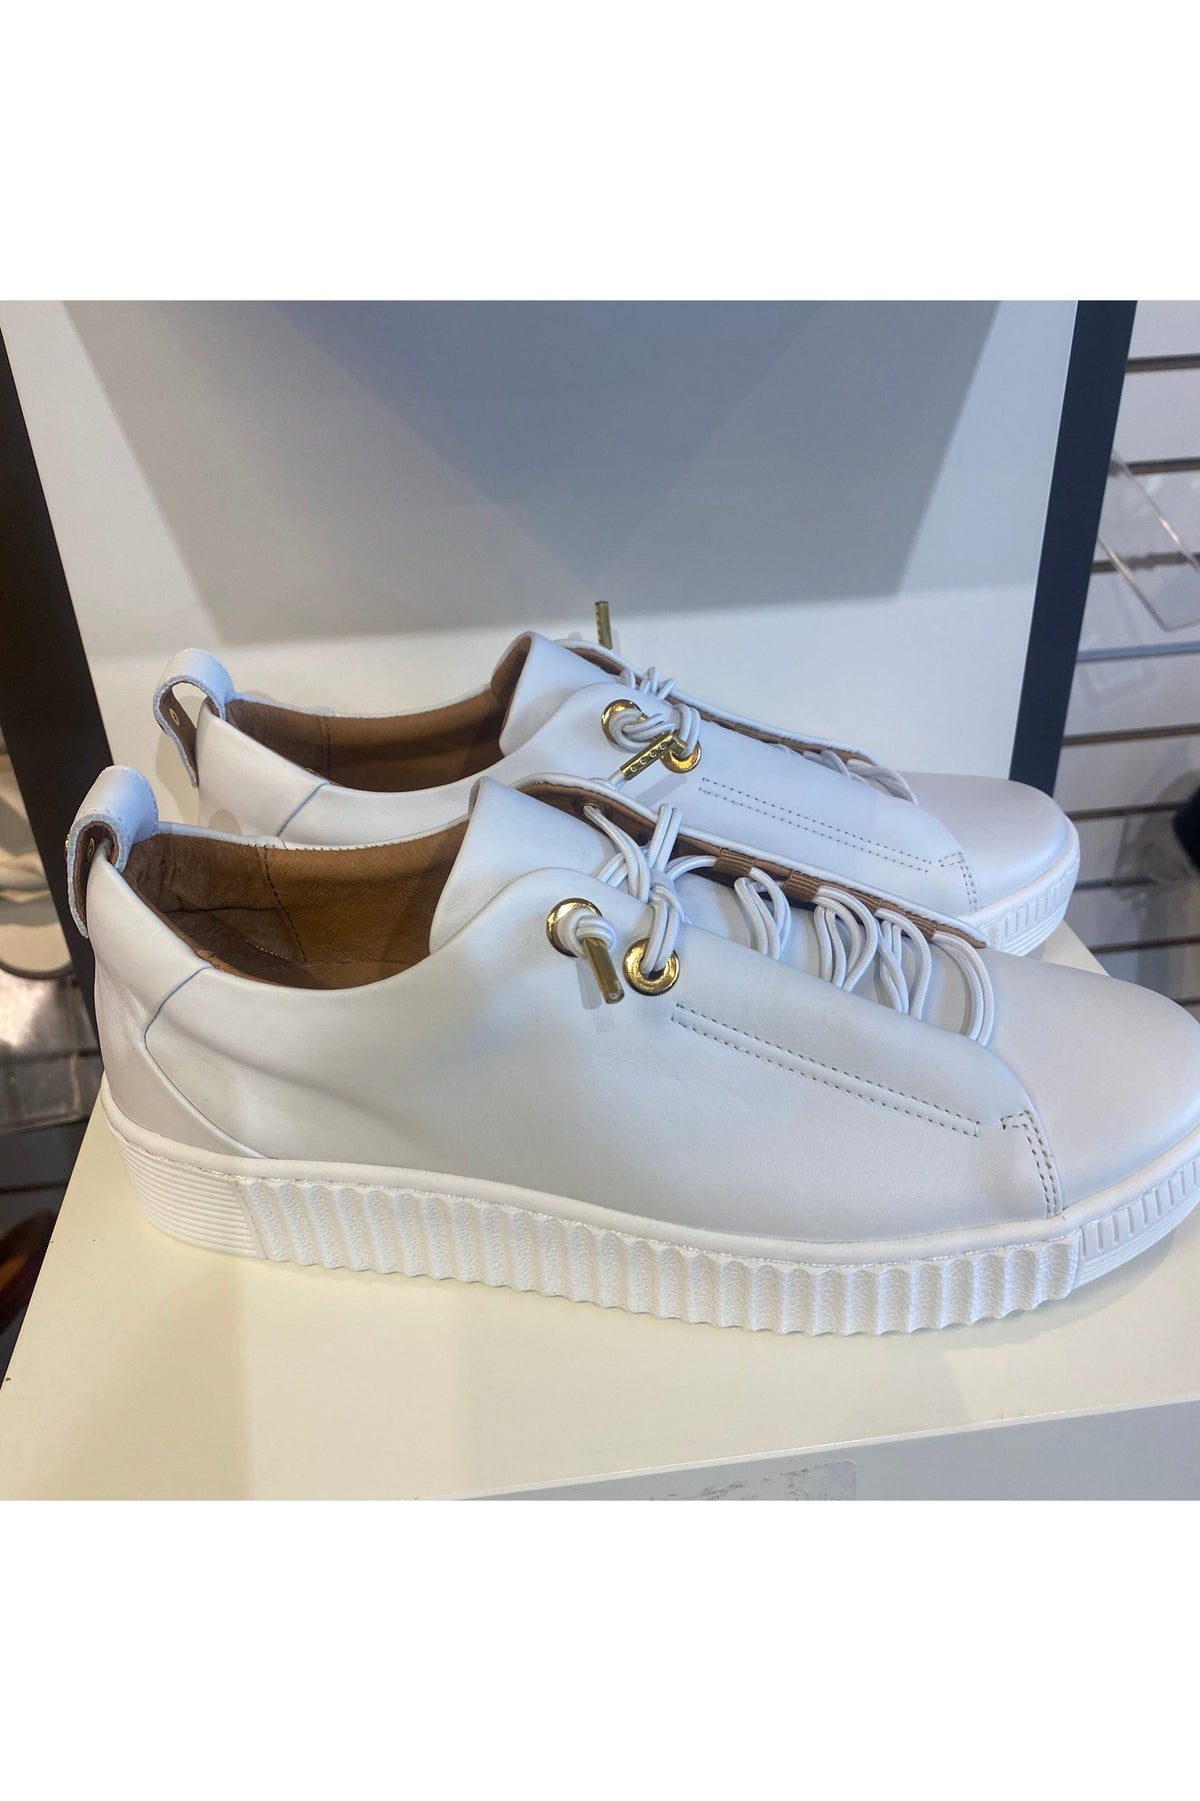 EOS Fashion Sneaker - Style Jool, pair